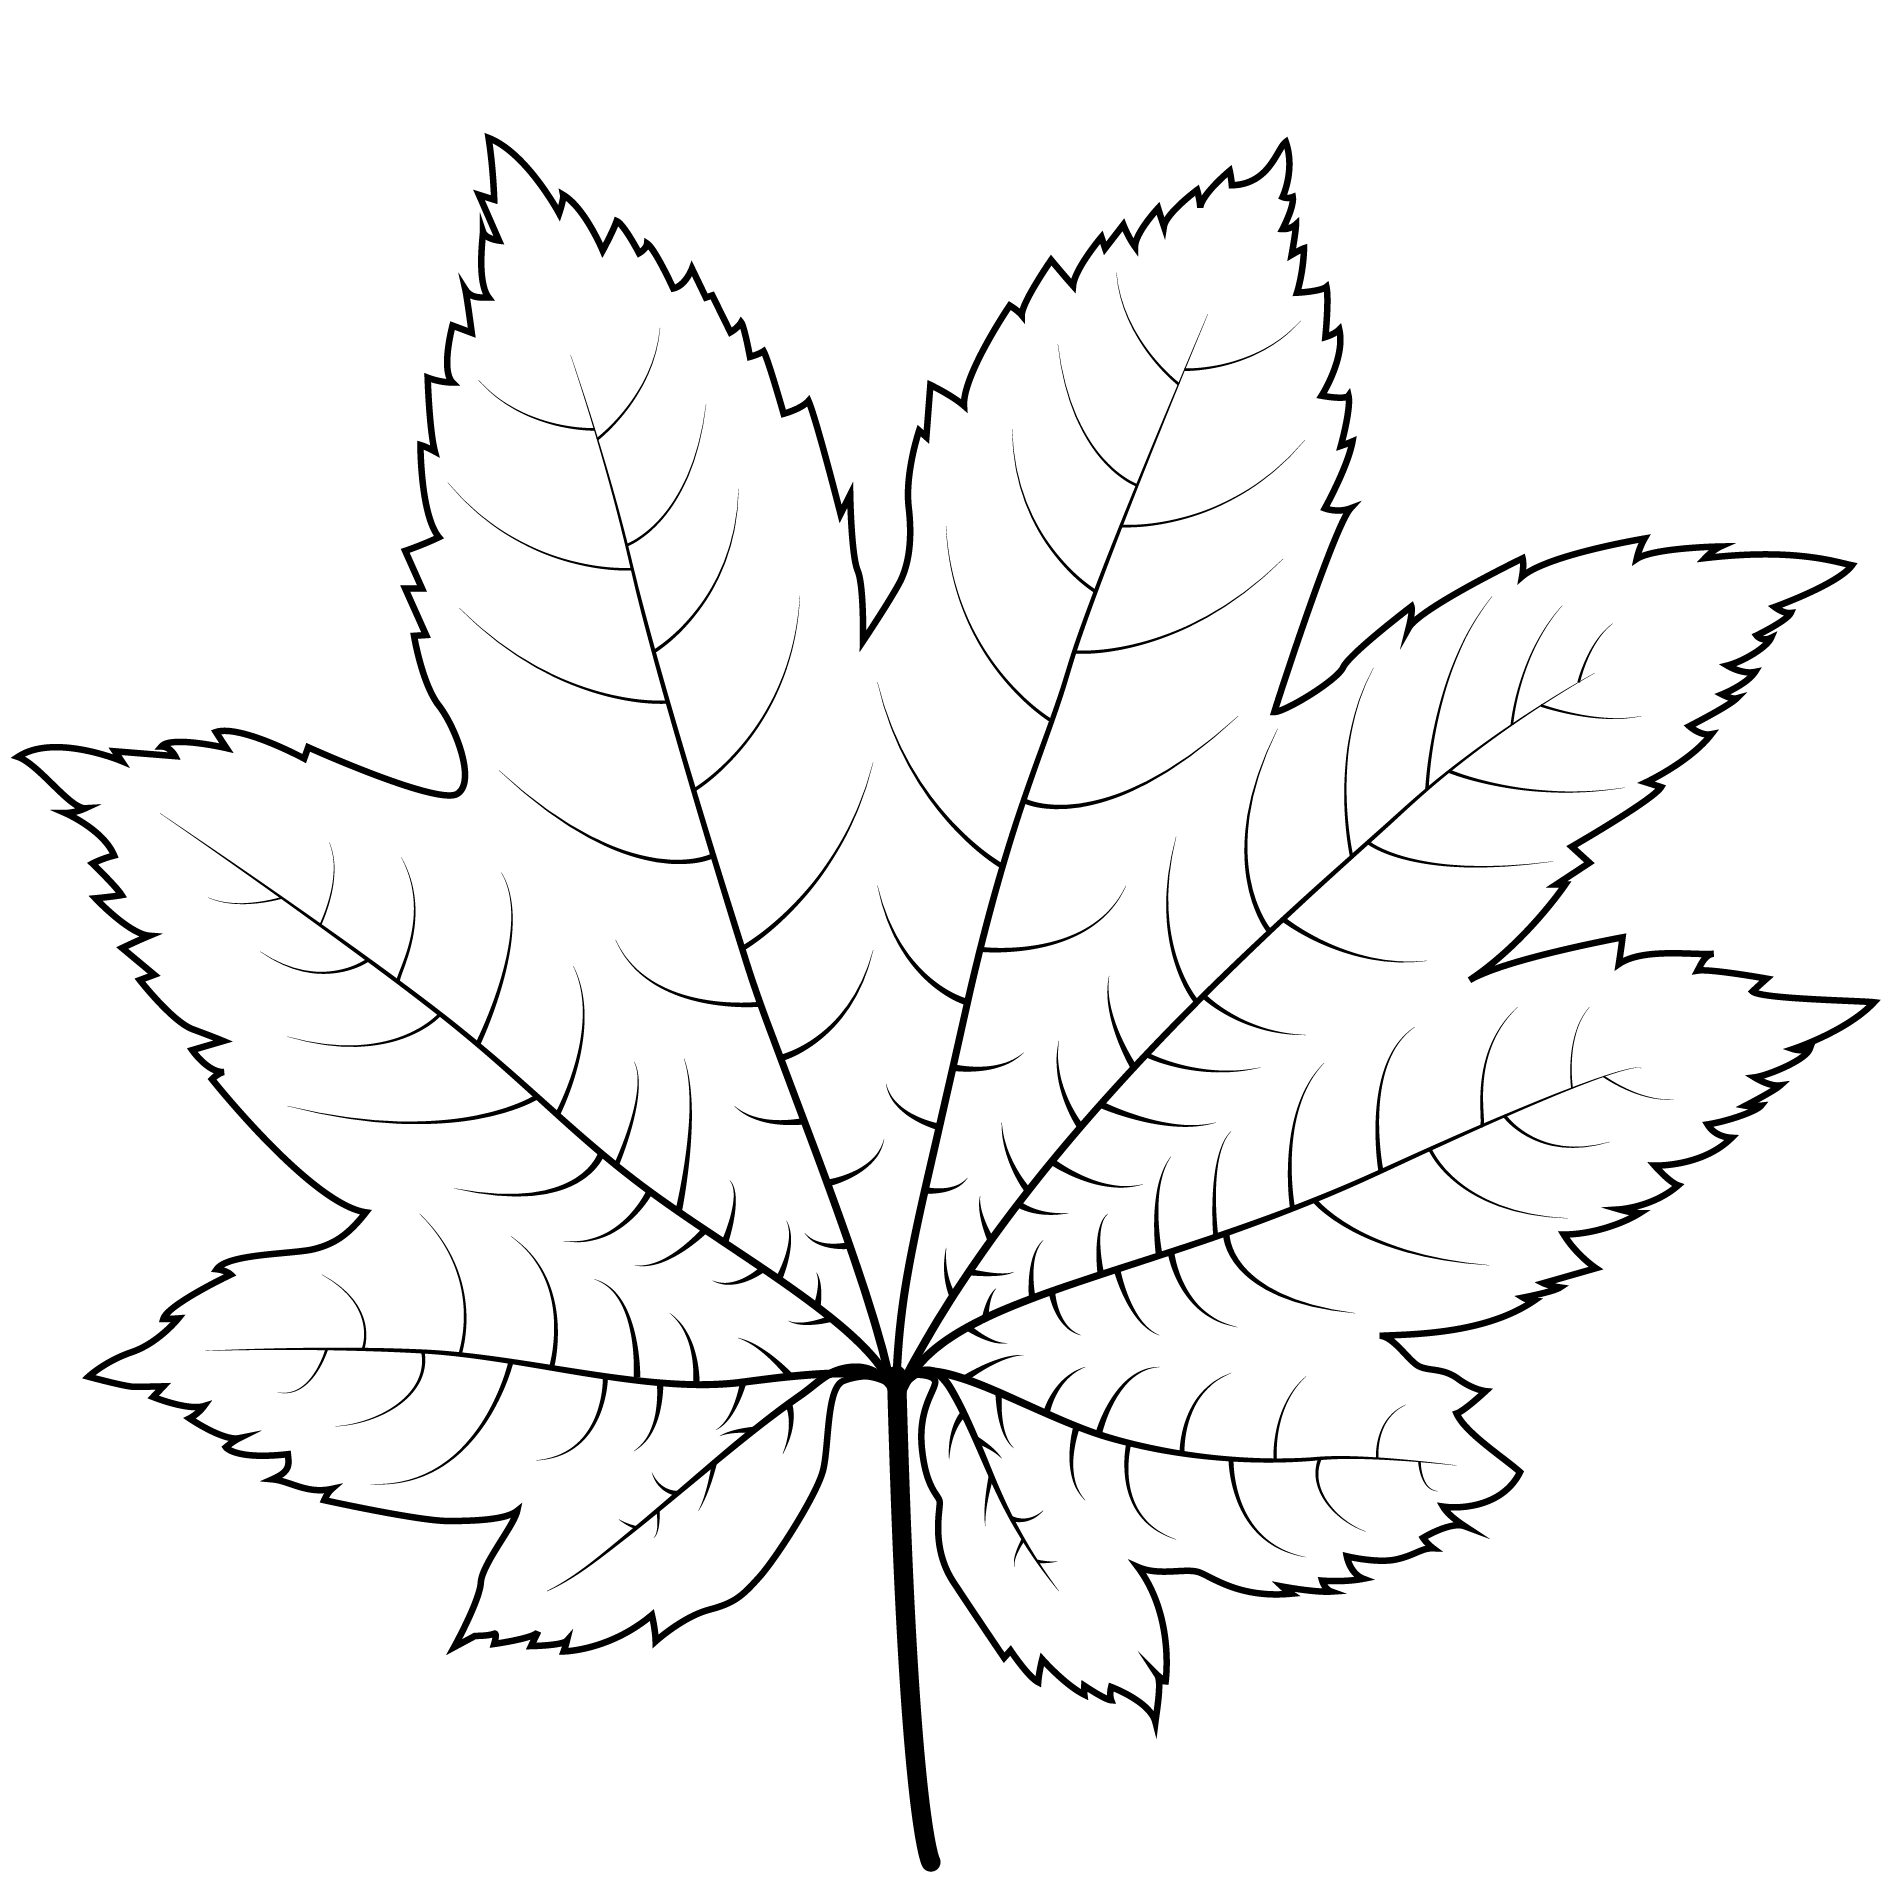 Картинка лист черно белый. Листья раскраска. Листья деревьев раскраска. Раскраска листья деревьев для детей. Листья раскраска для детей.